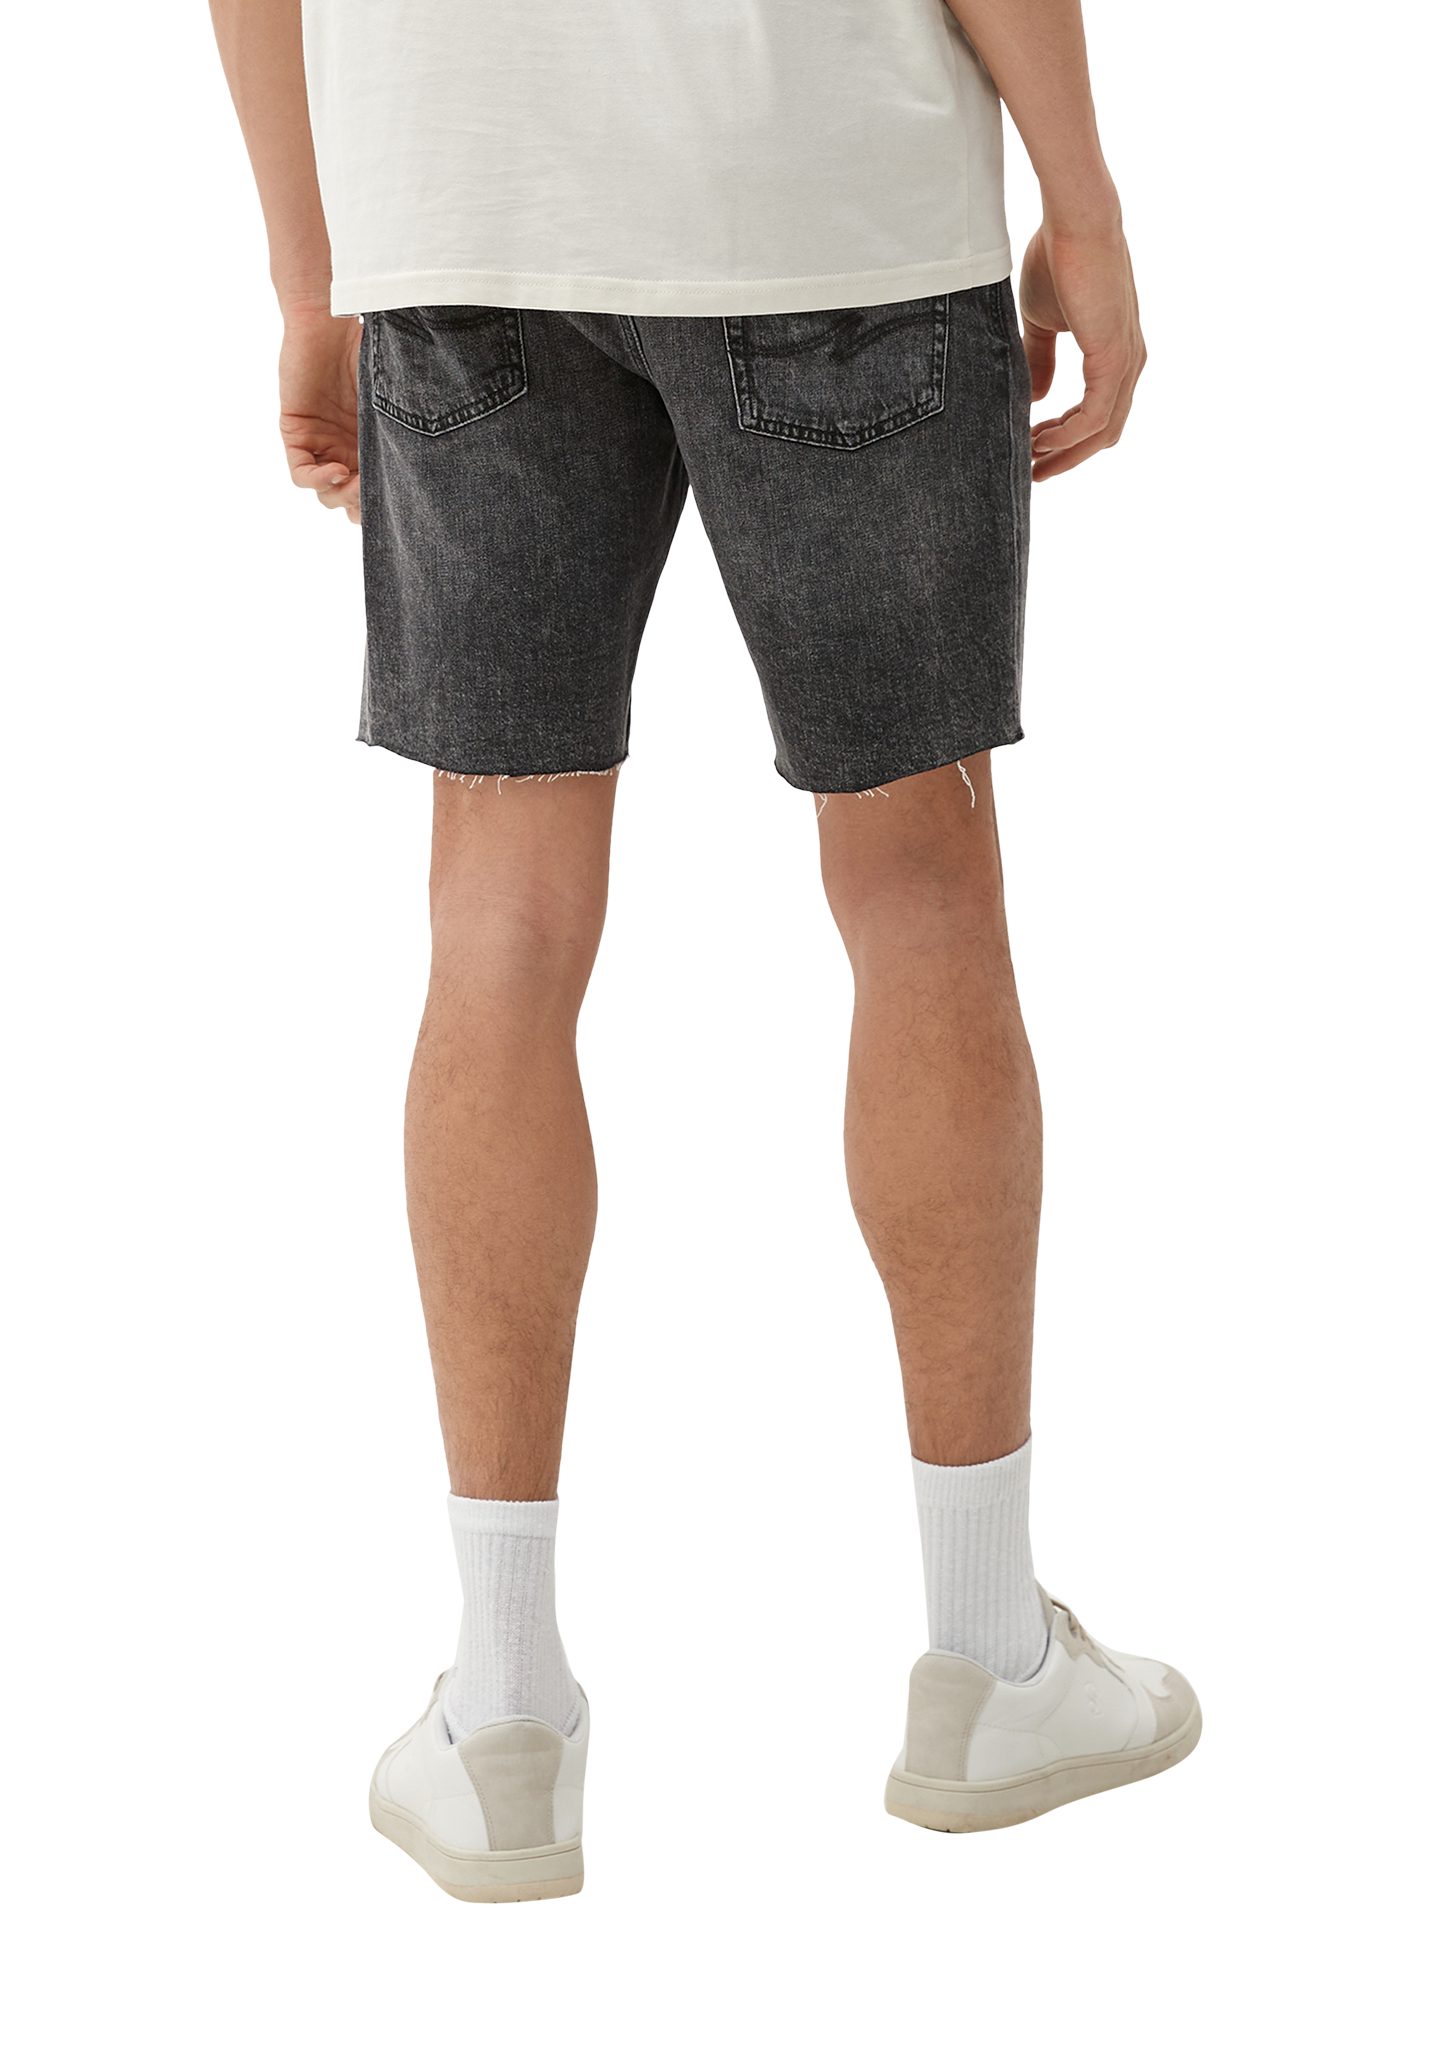 / Rise dunkelgrau Waschung, Label-Patch, Jeansshorts Jeans-Shorts / Ziernaht Fit Regular Mid QS John / Straight Leg